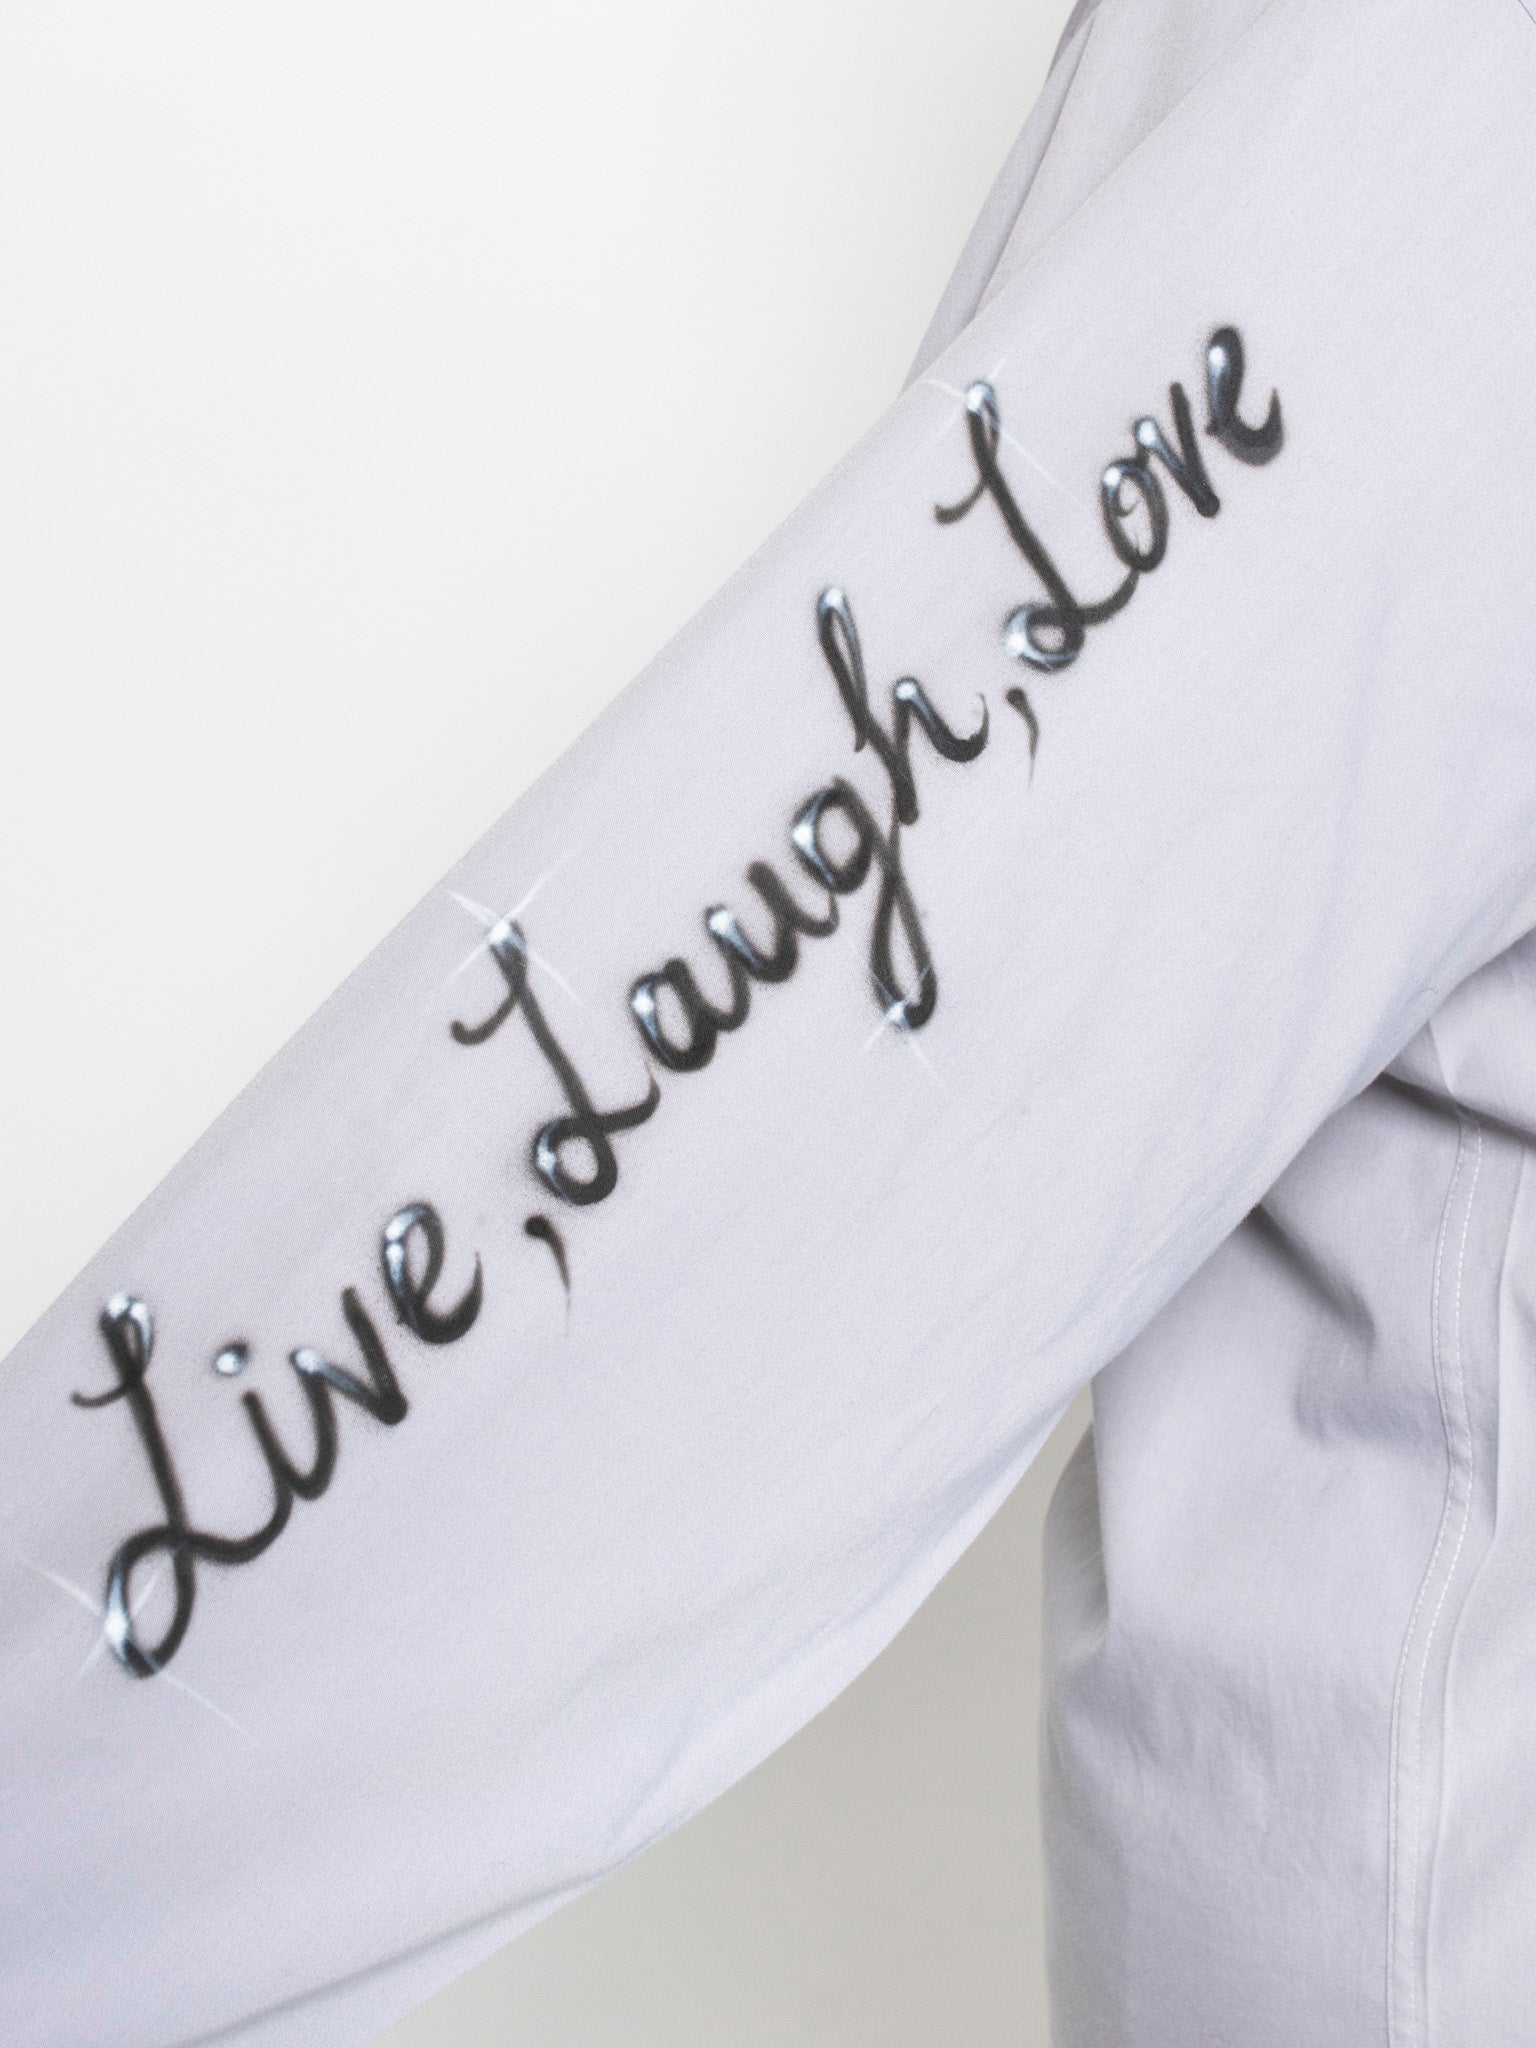 Femlord x BRZ - "Live, Laugh, Love" Shirt